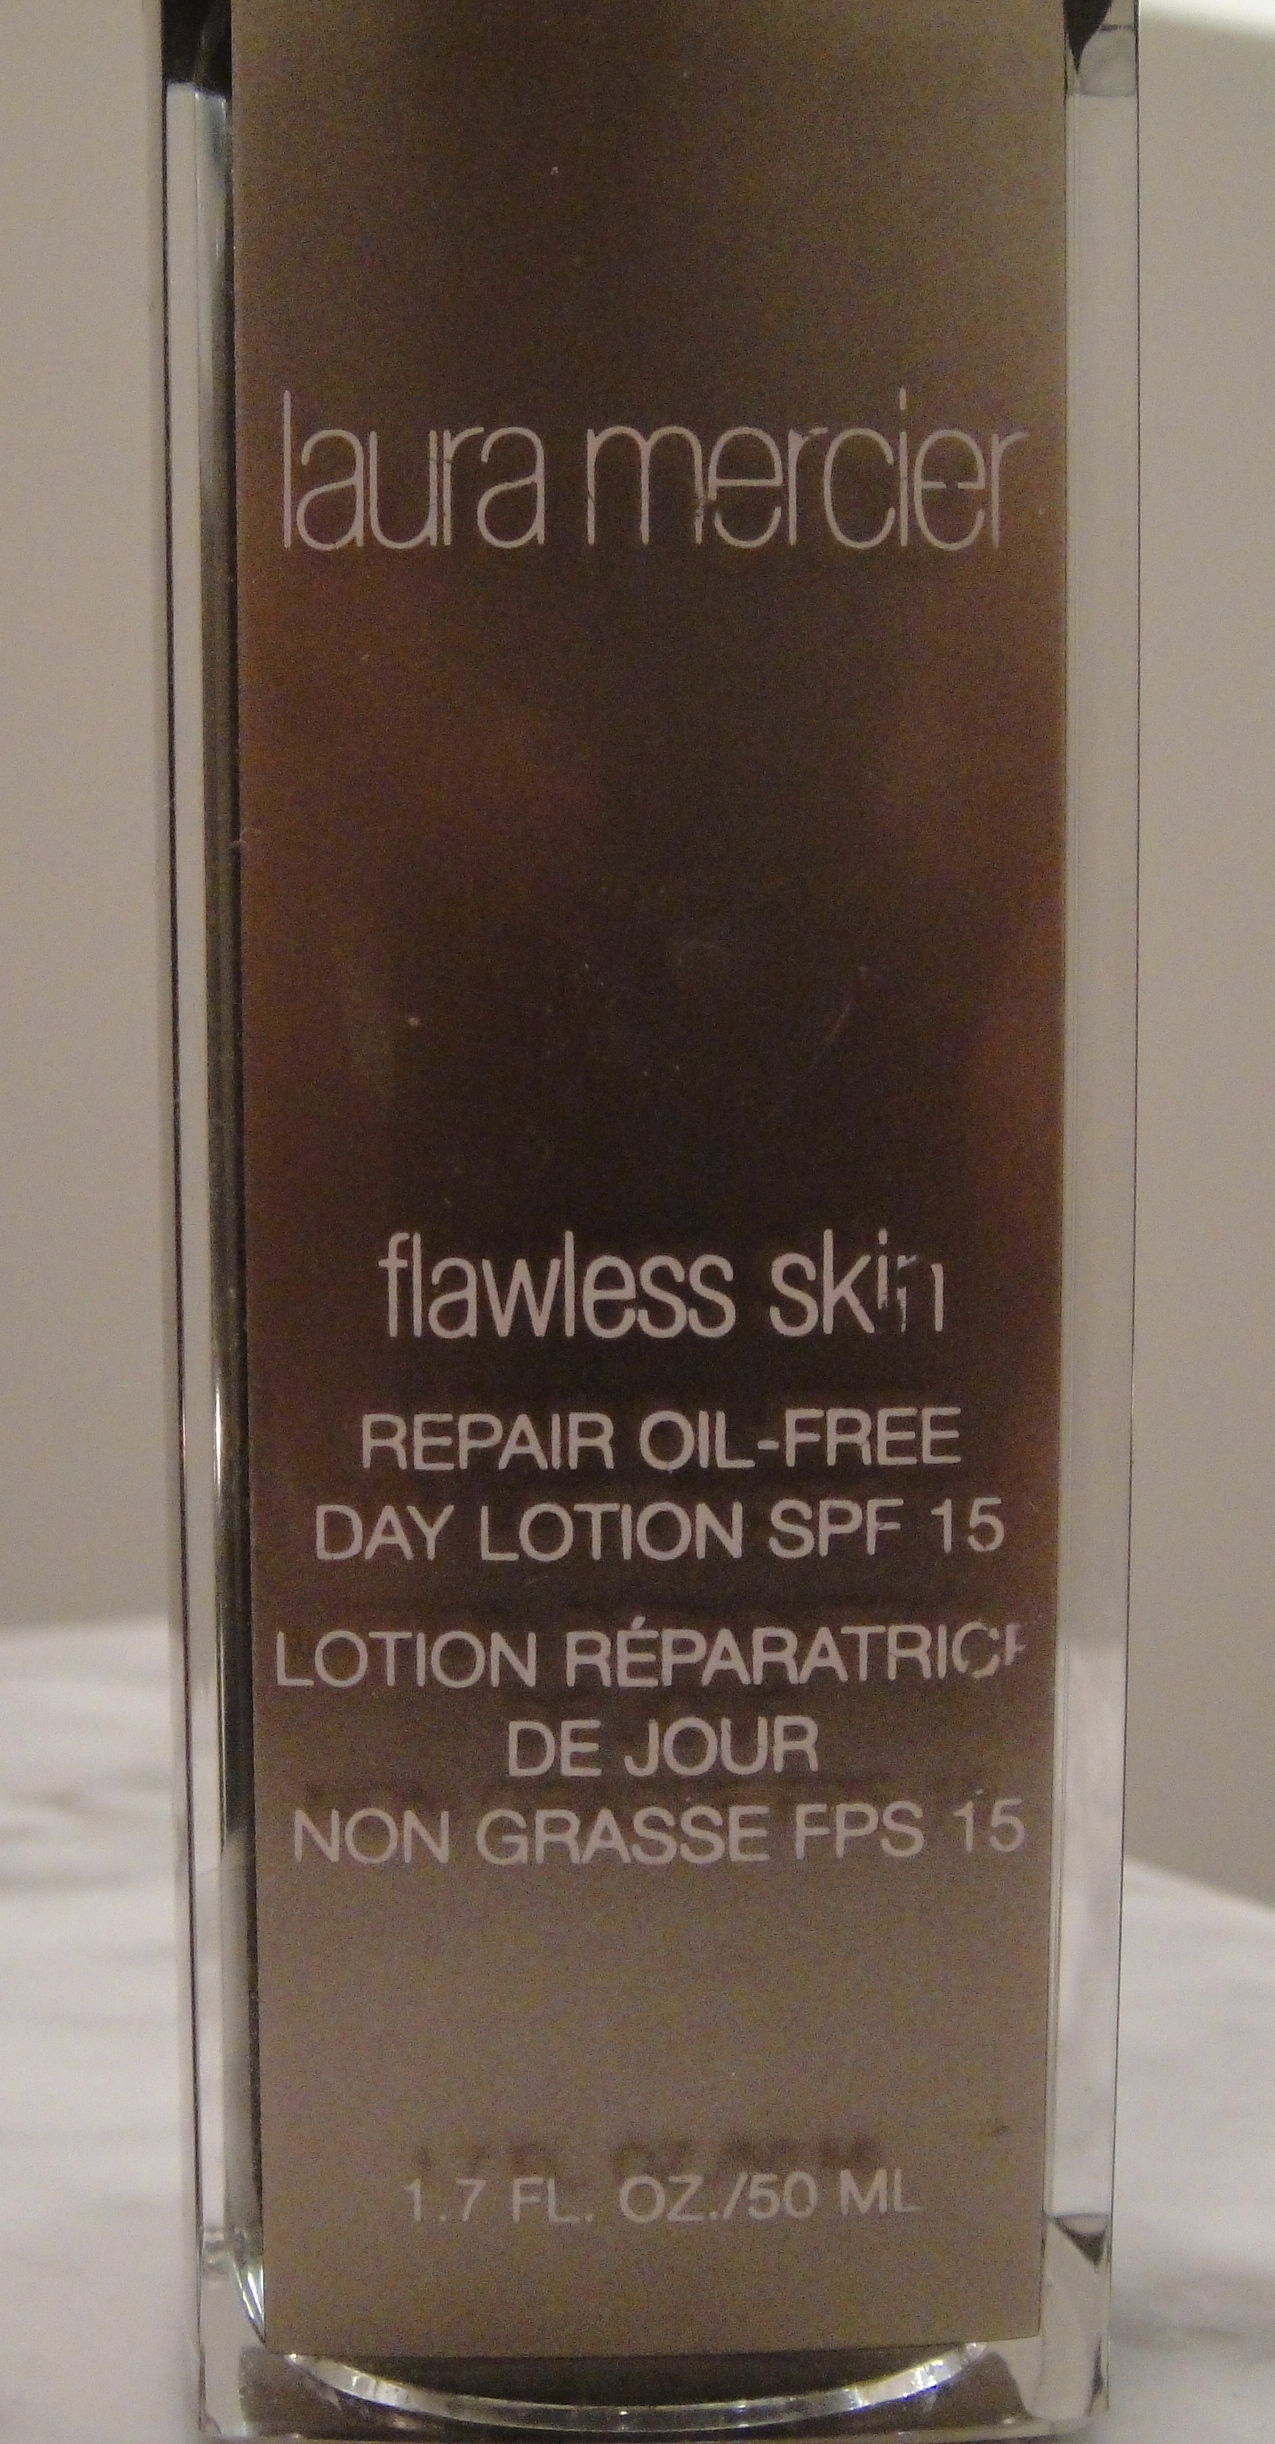 Face: Laura Mercier, flawless skin repair oil-free day lotion (SPF 15)